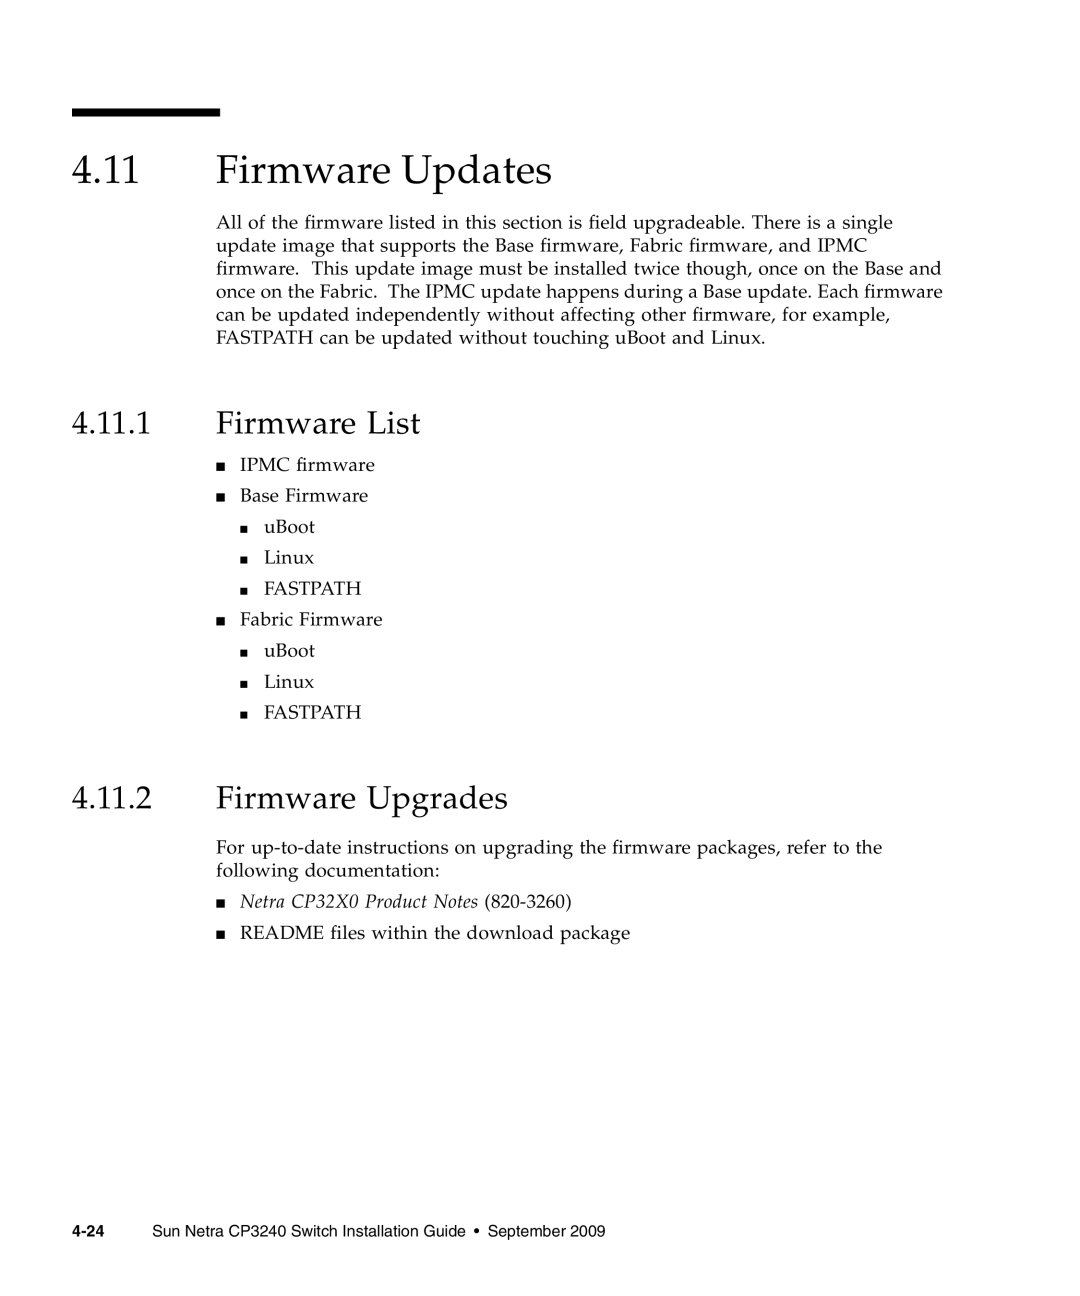 Sun Microsystems CP3240 manual Firmware Updates, Firmware List, Firmware Upgrades 